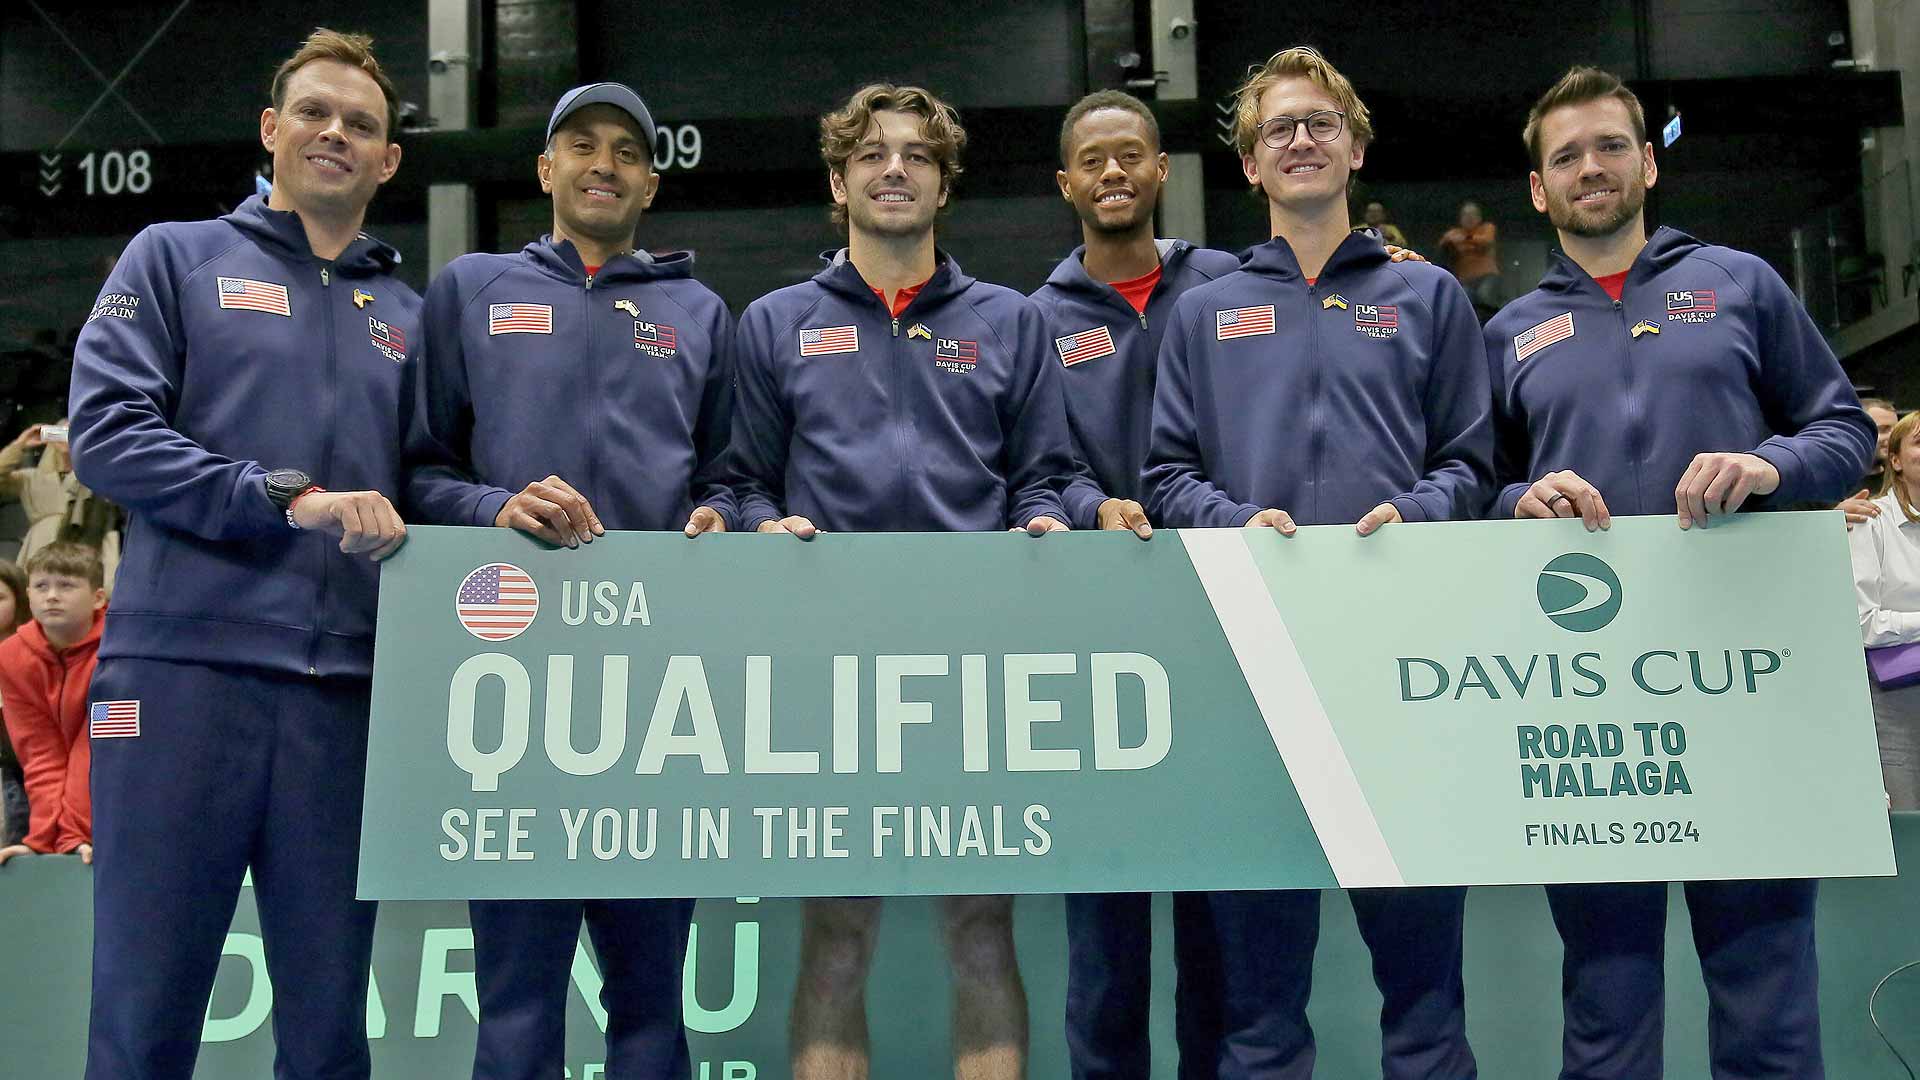 Davis Cup Qualifiers